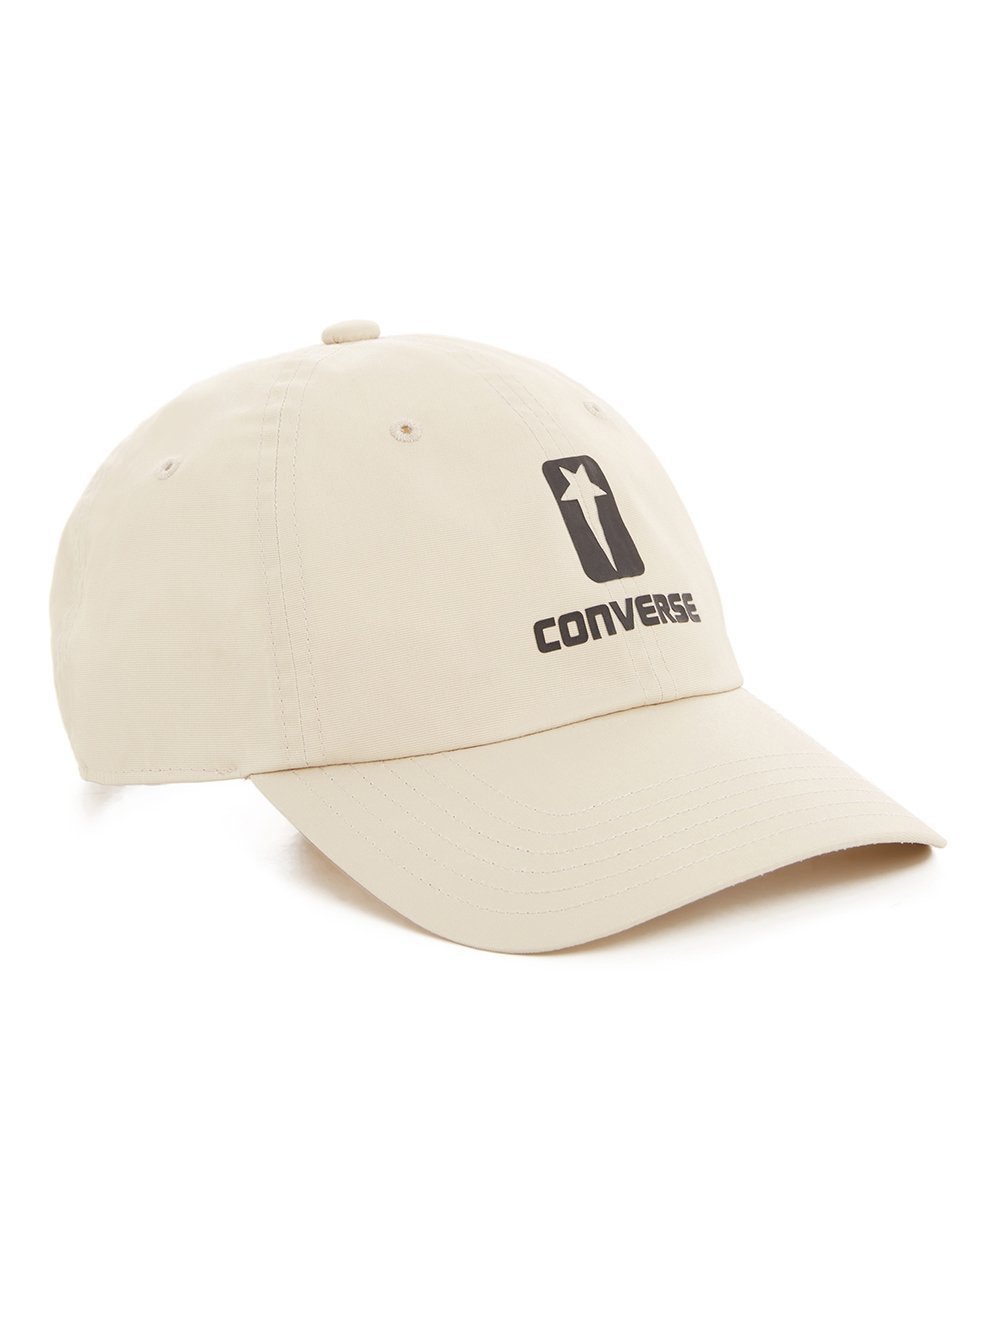 CONVERSE X DRKSHDW CAP